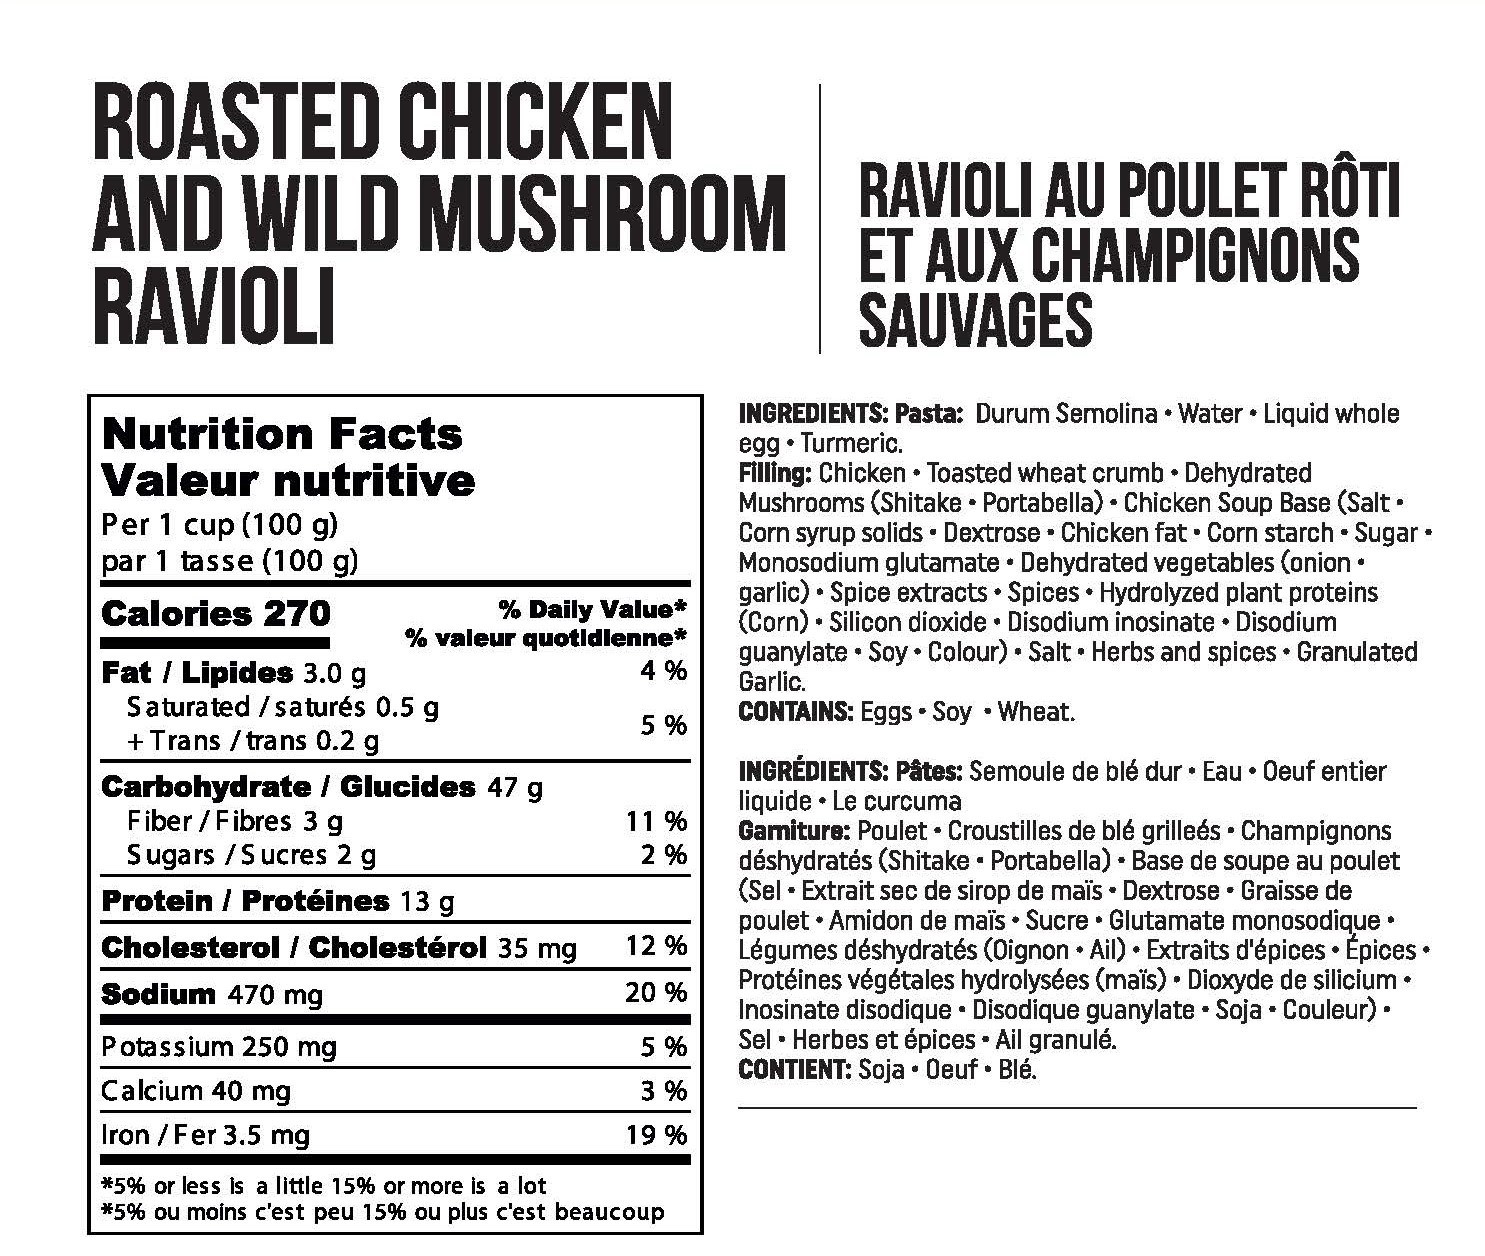 Chicken and Mushroom Ravioli